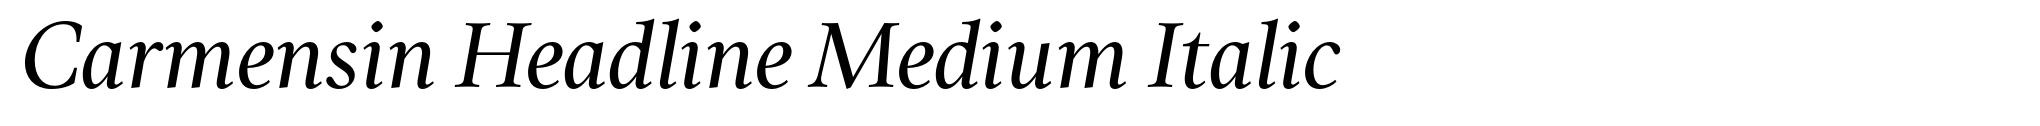 Carmensin Headline Medium Italic image